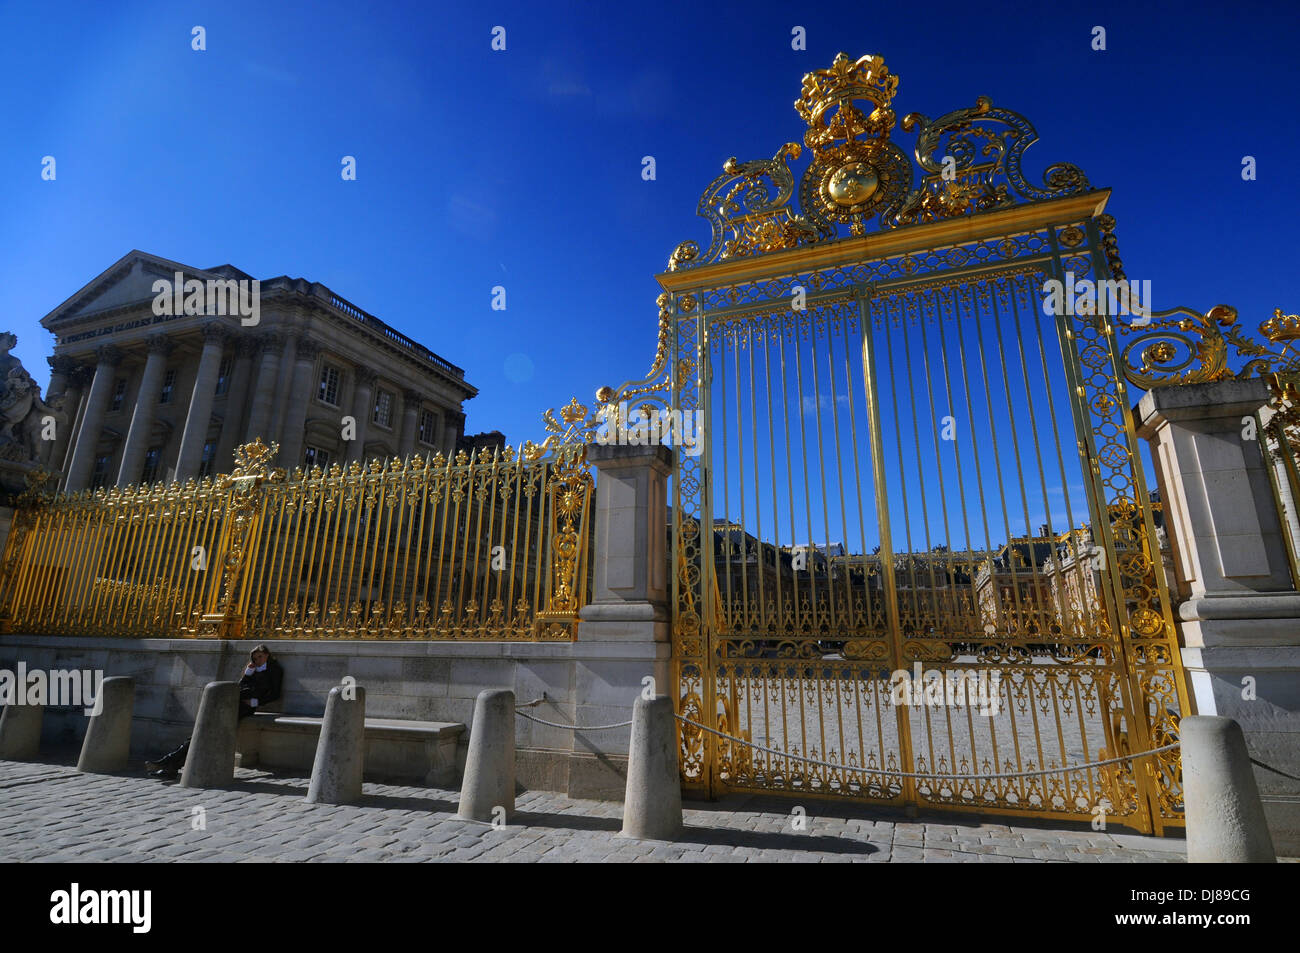 Golden gates of the Palace at Versailles, Paris, France. No MR or PR Stock Photo